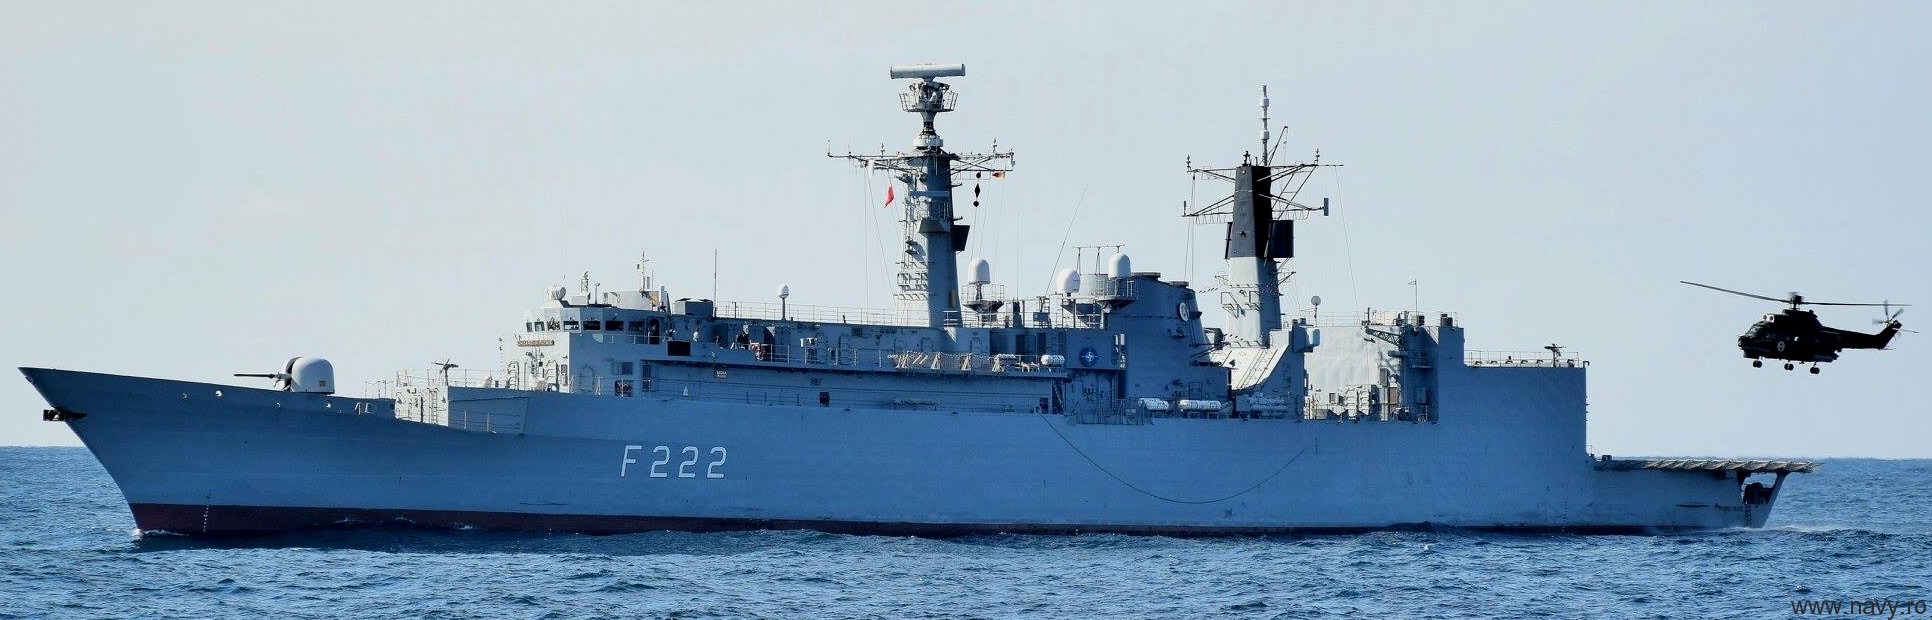 f-222 ros regina maria frigate type 22 broadsword class romanian navy 19